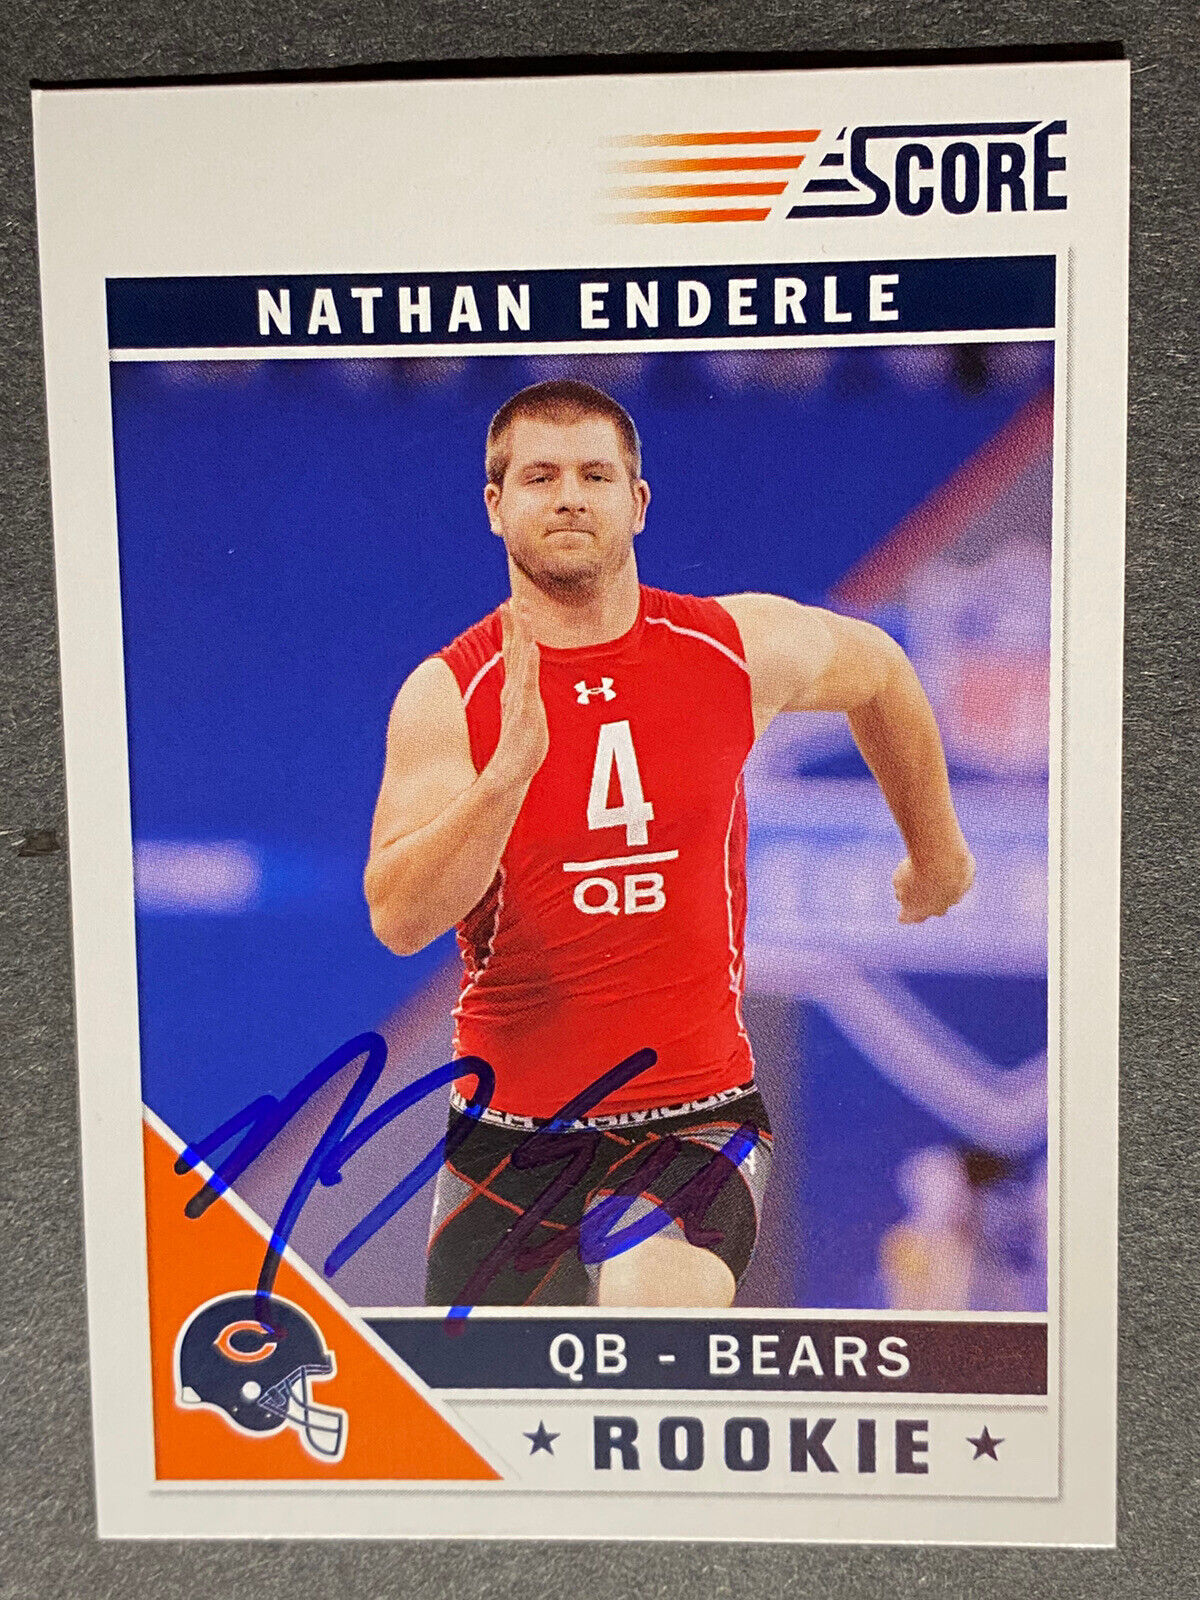 2011 NATHAN ENDERLE SIGNED SCORE CHICAGO BEARS CARD, COA  (F08)